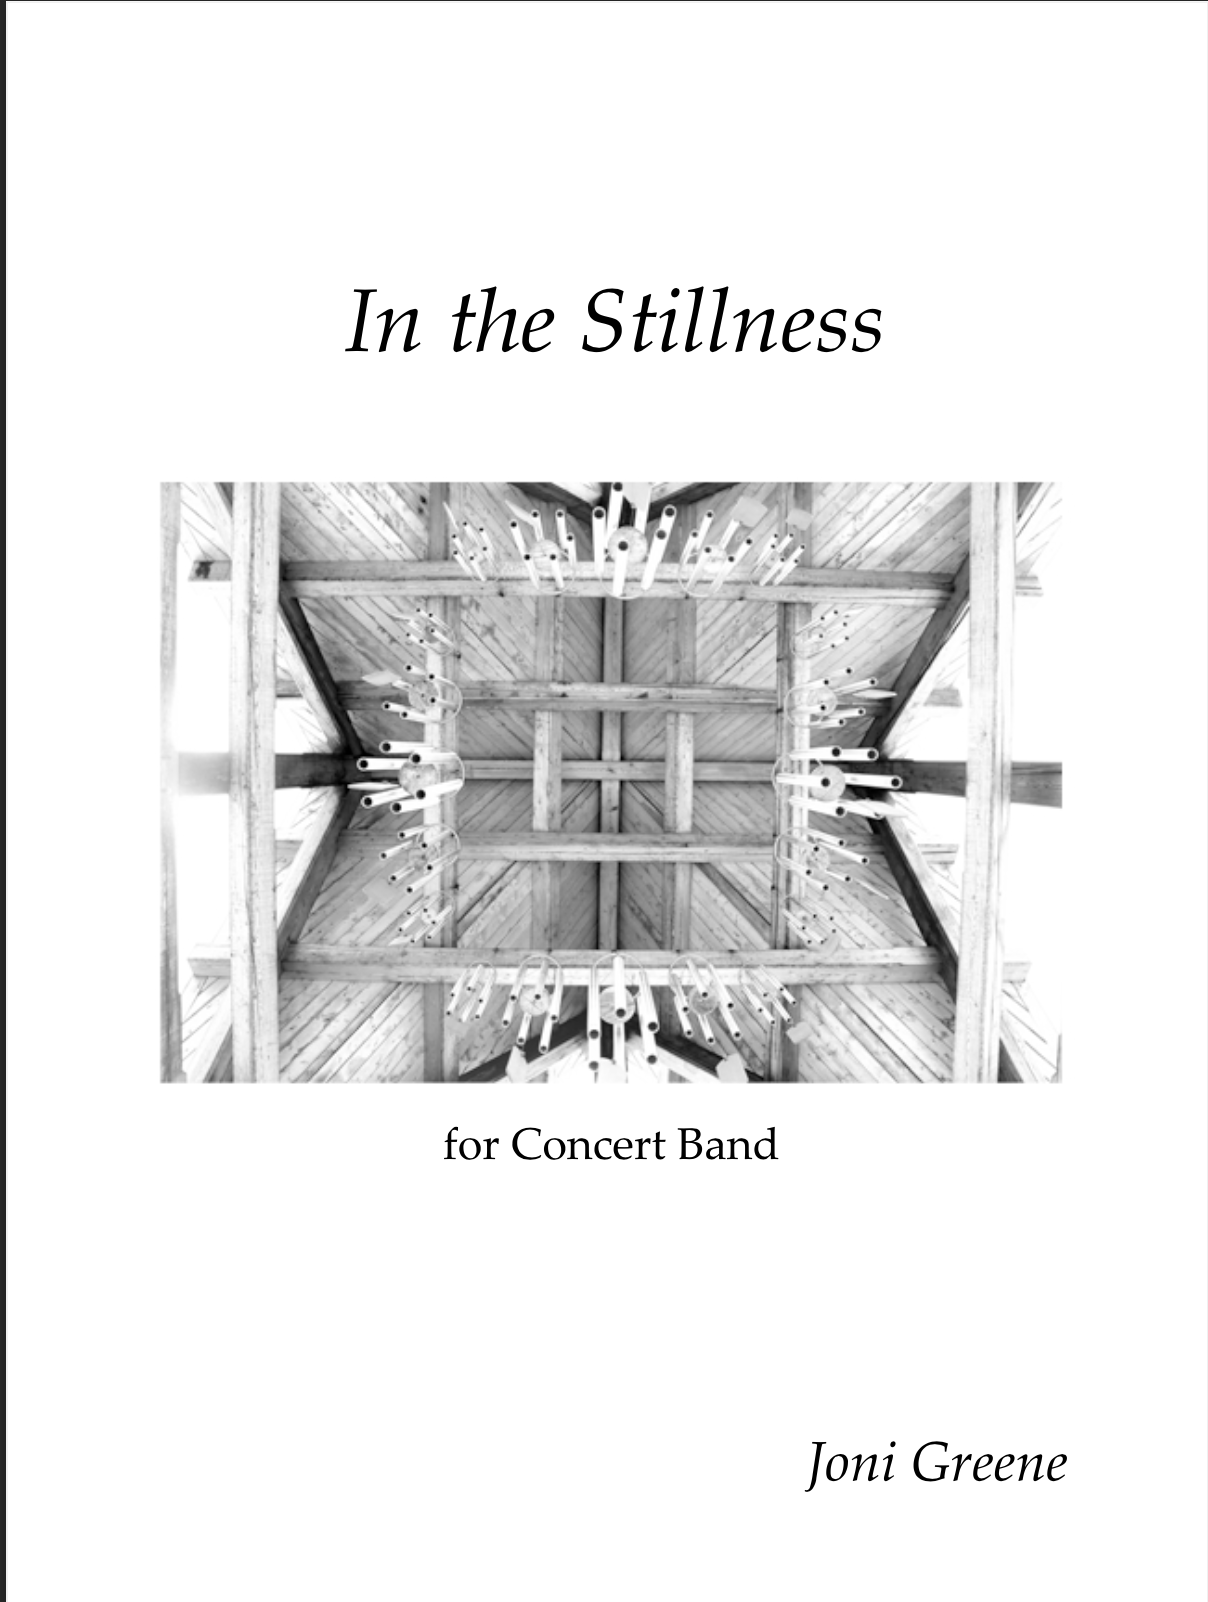 In The Stillness by Joni Greene